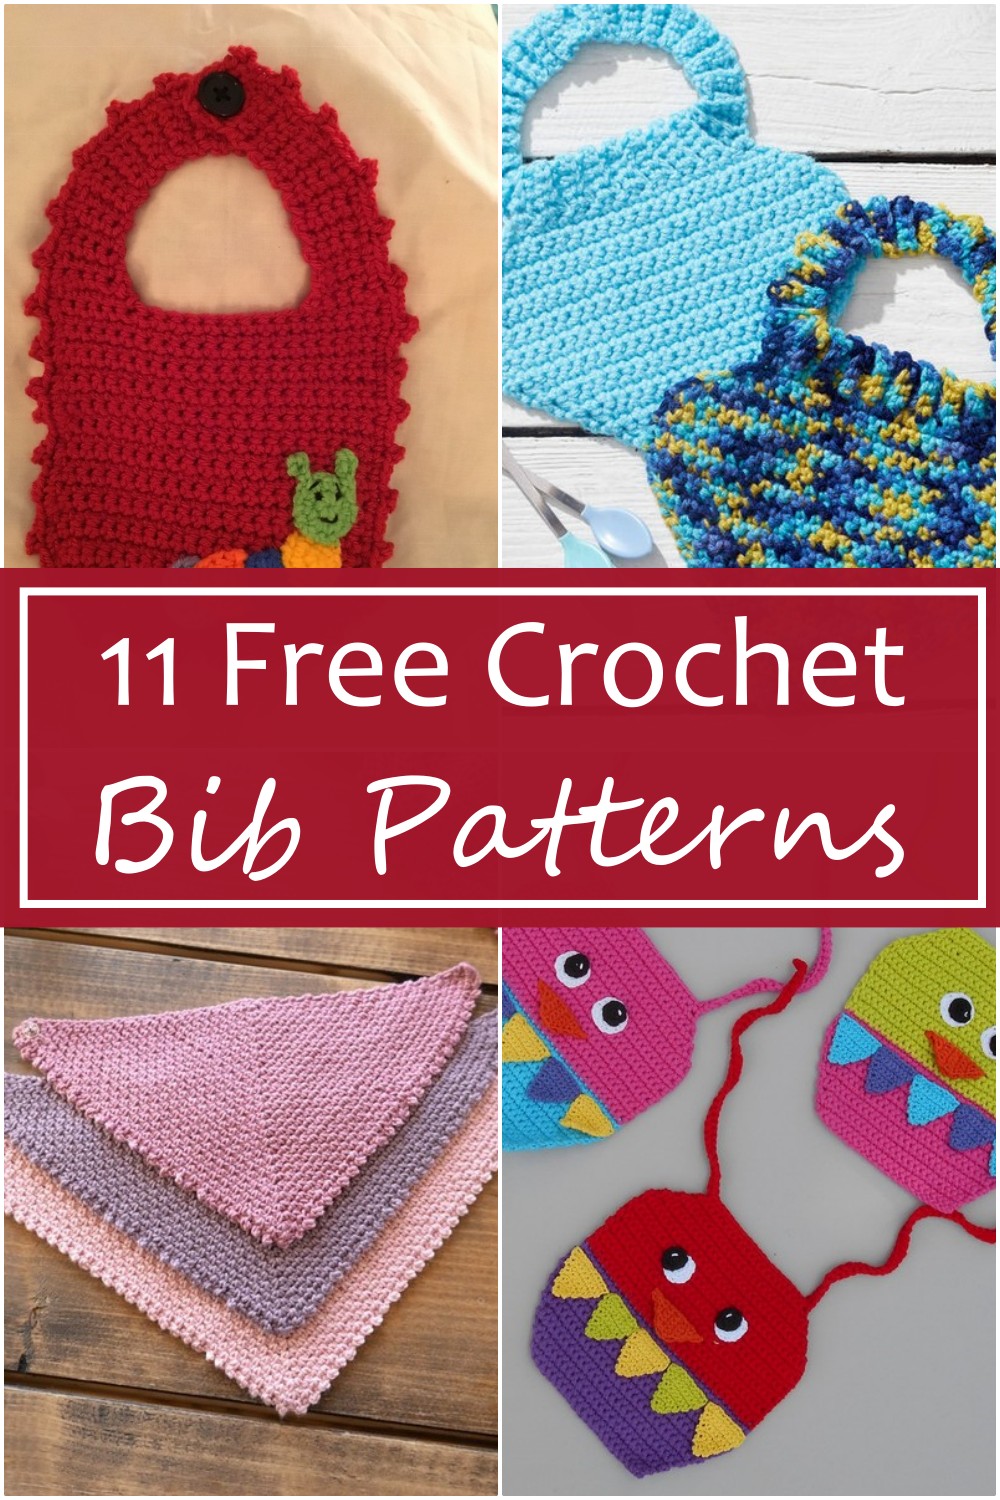 11 Free Crochet Bib Patterns